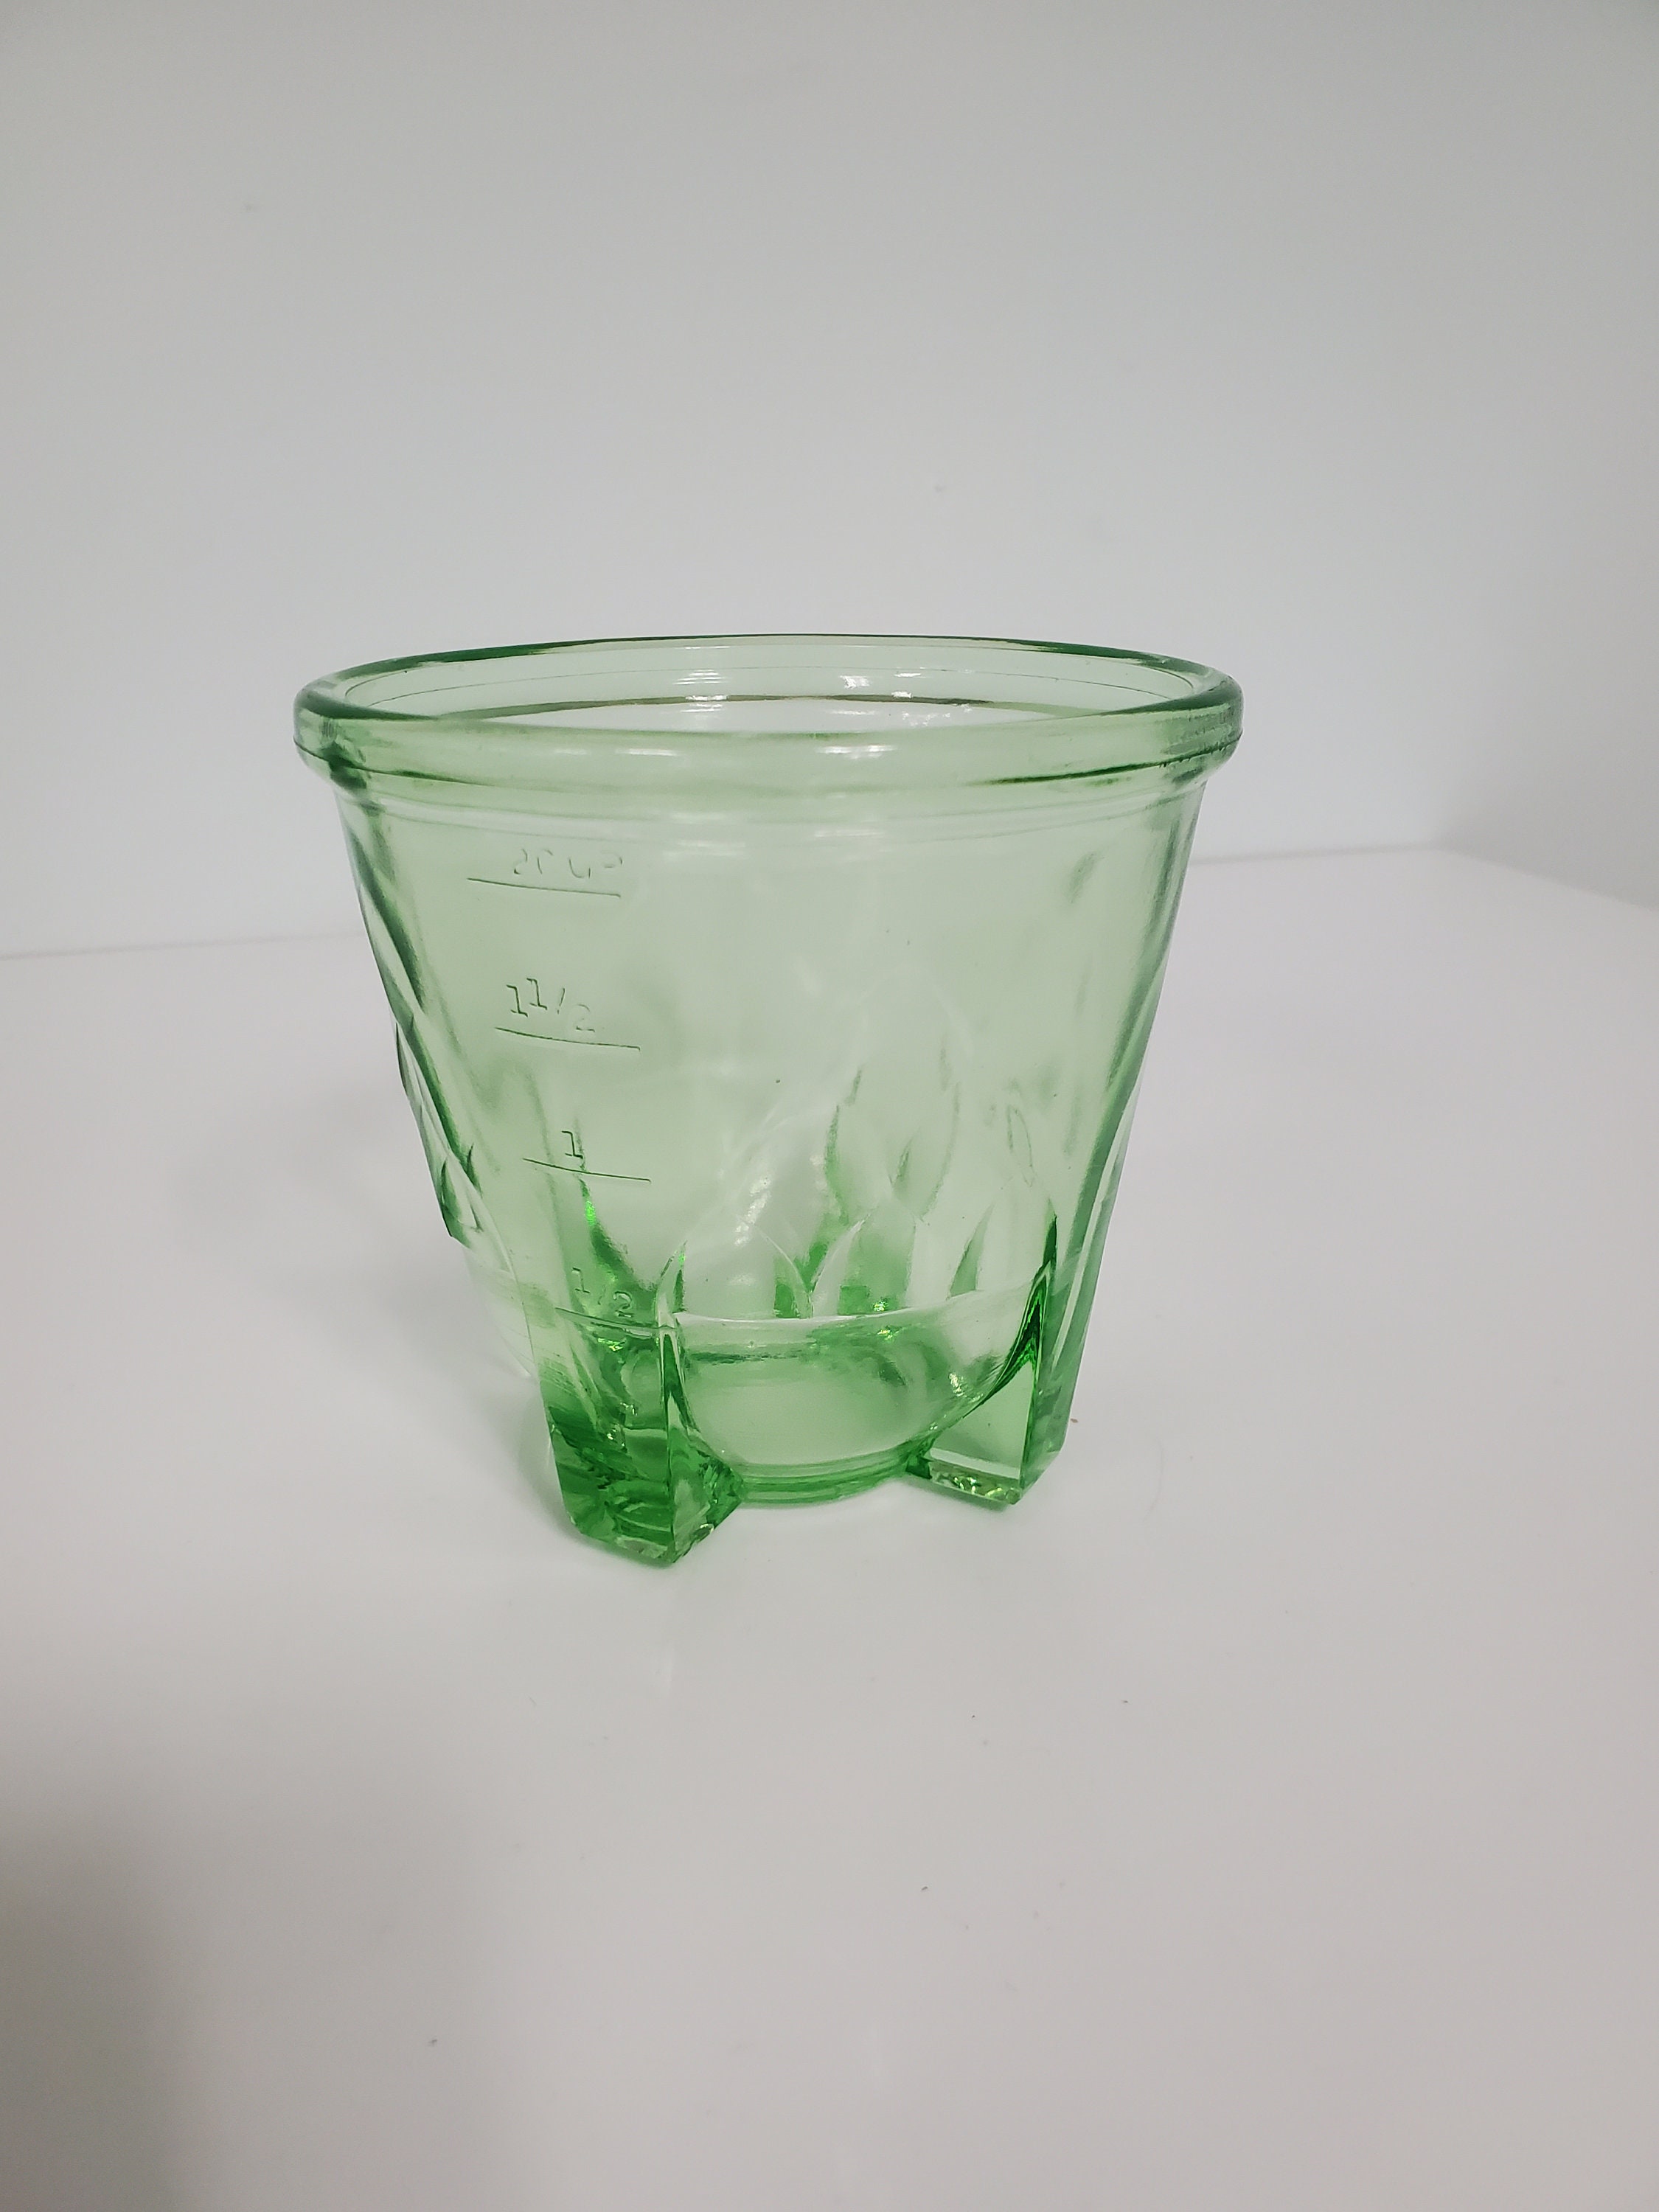  SHERCHPRY Measuring Cup Green Glass Measuring Cup